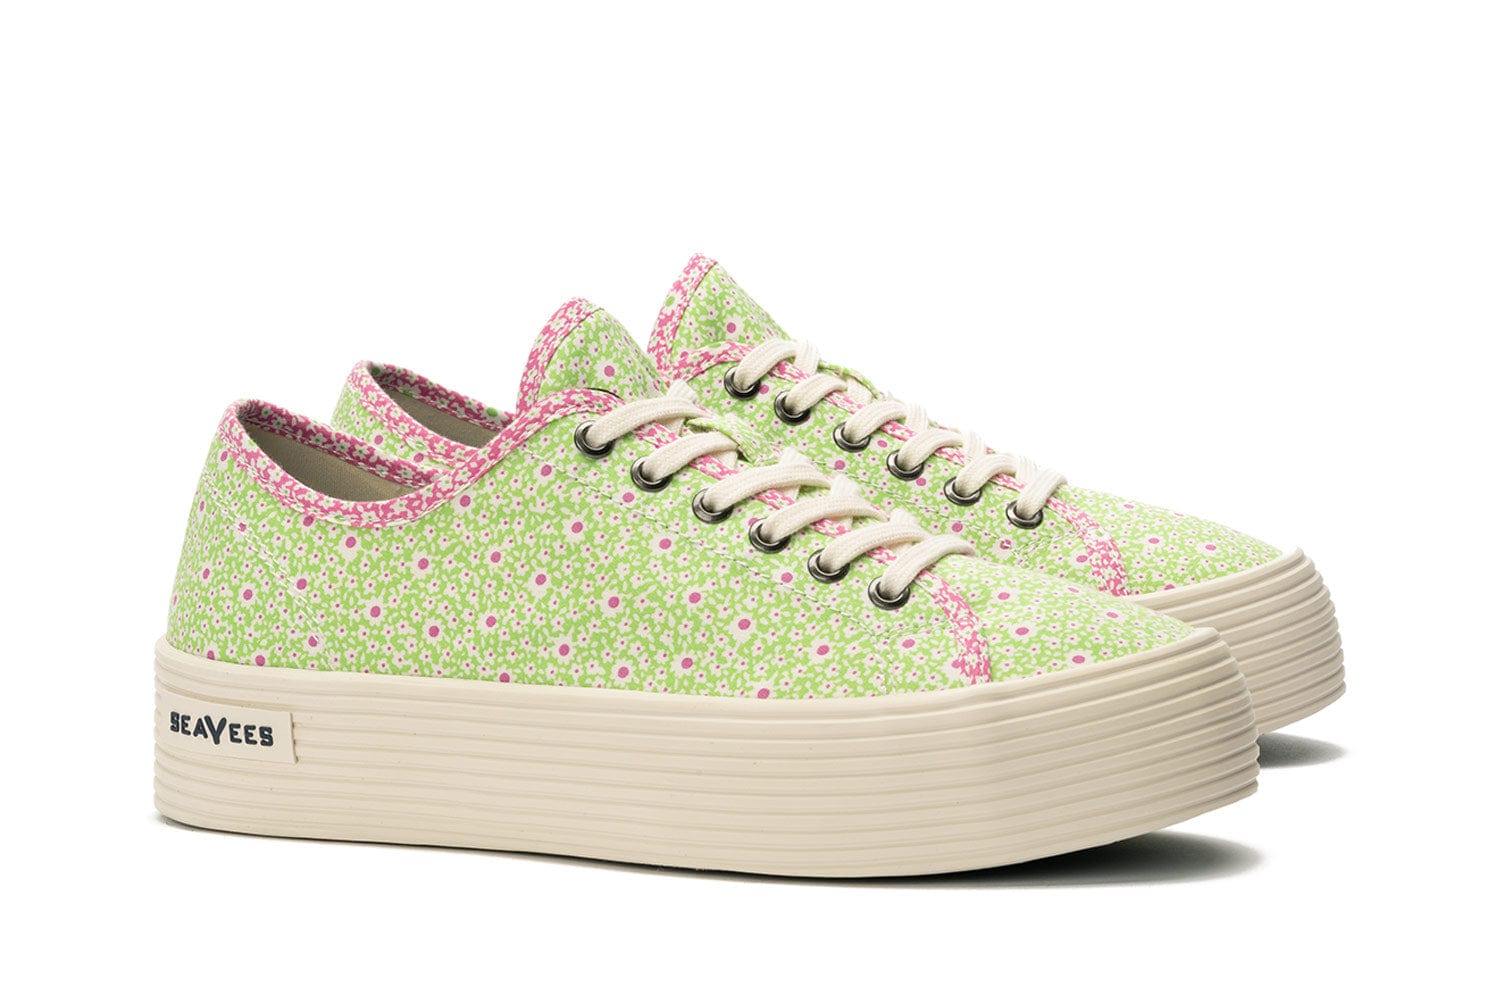 Shoes Women\'s Flower Lime | SeaVees Pink Monterey Platform Sneaker